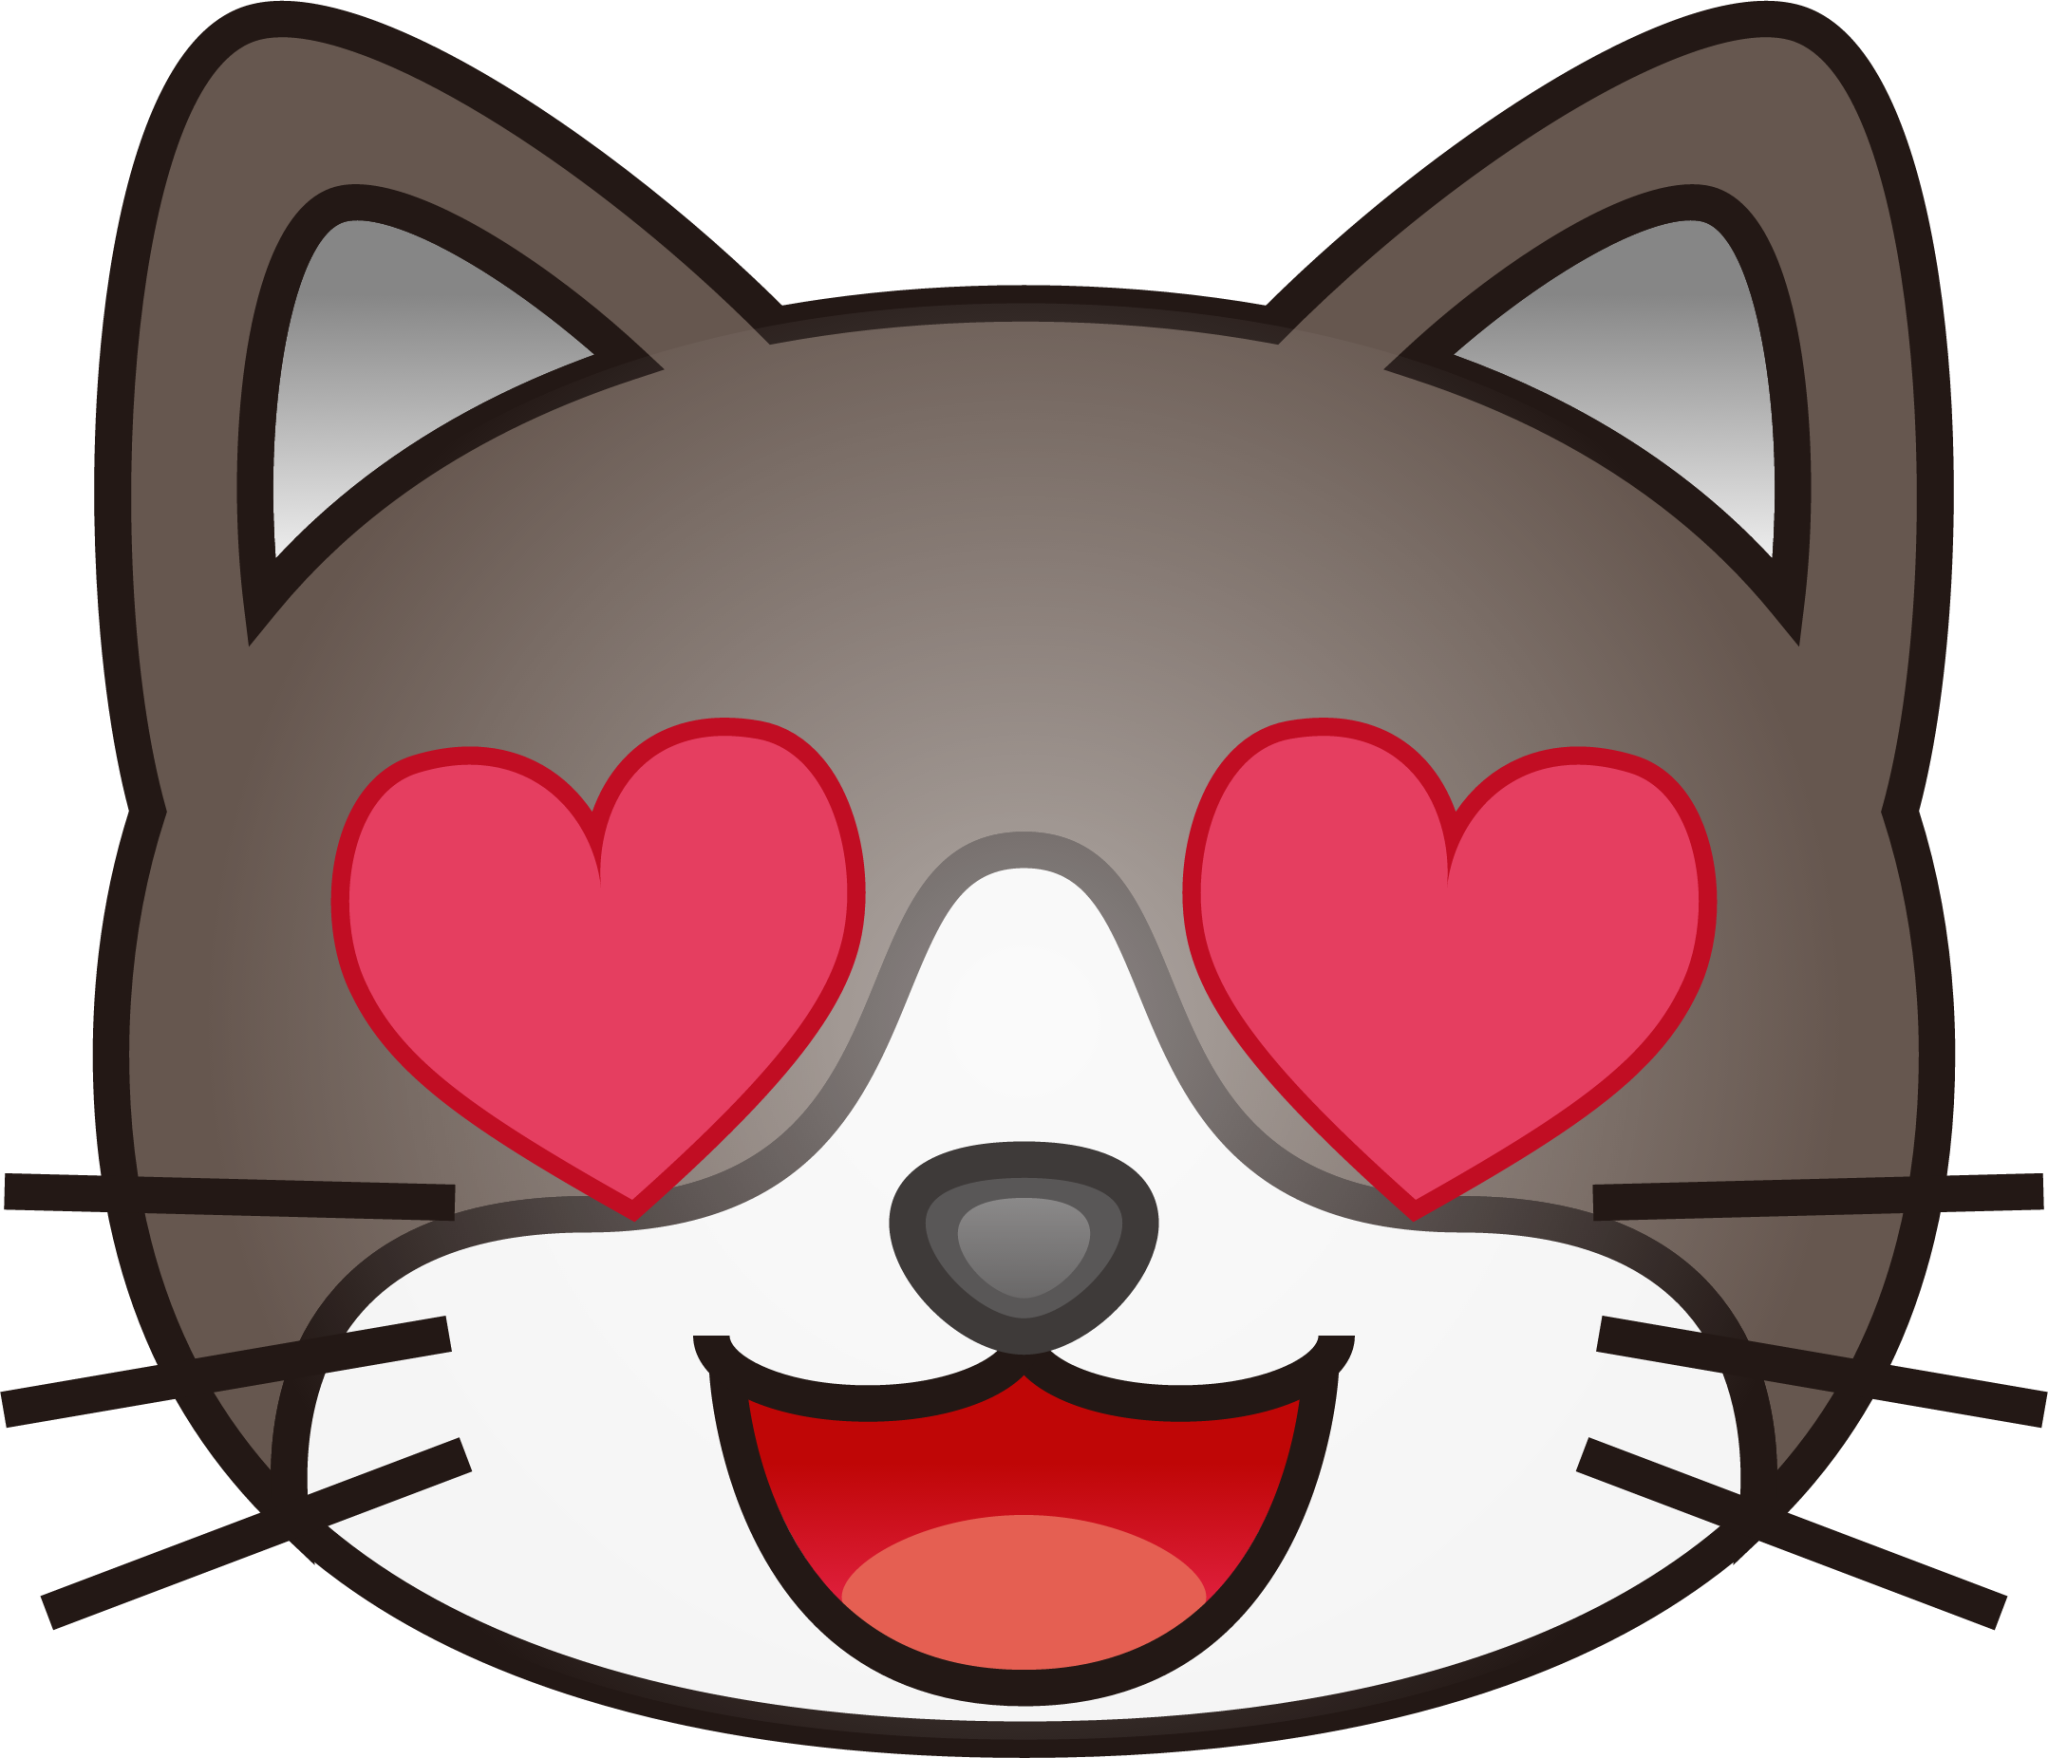 heart-eyes-cat-emoji-2048x1758-54scnzlo.png